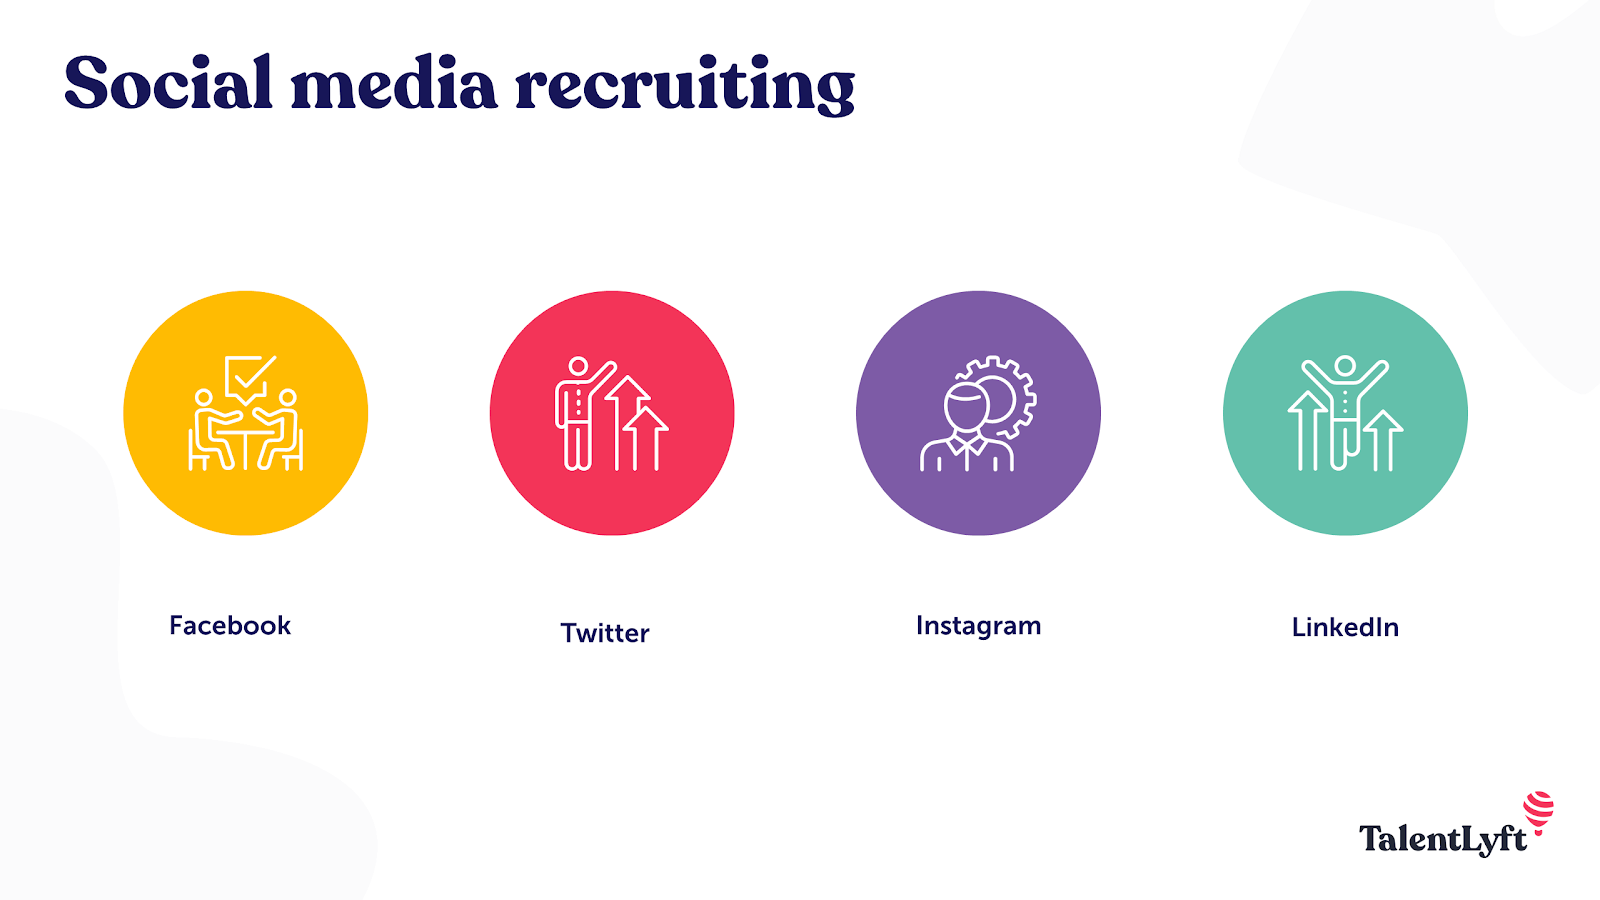 Social media recruitment platforms